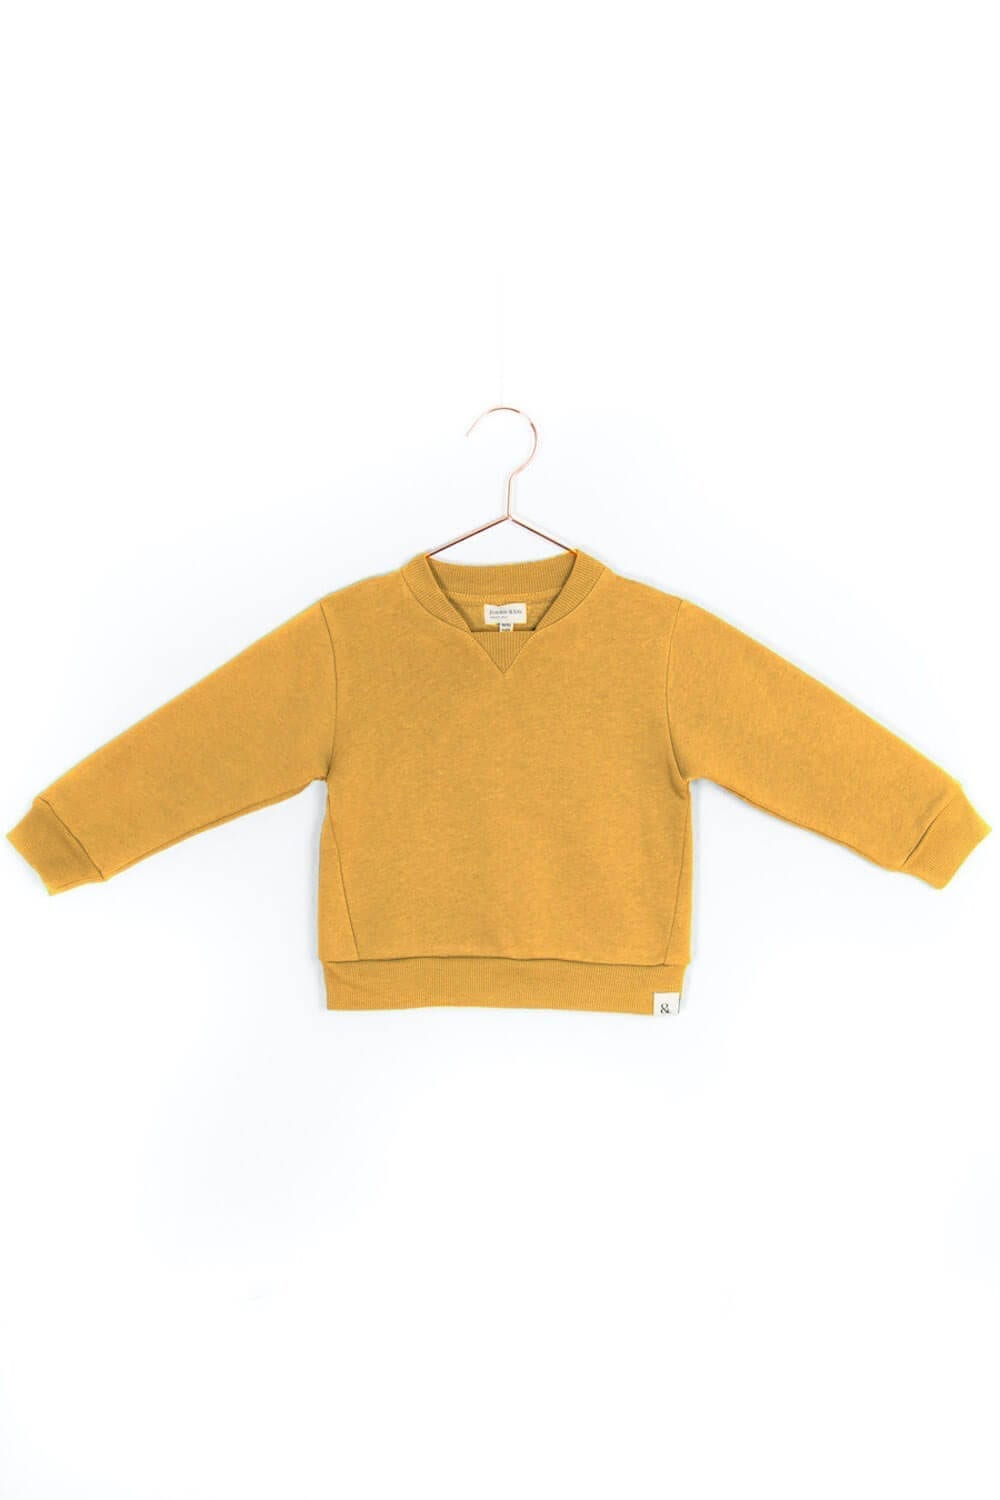 Sweater Kinder, mustard